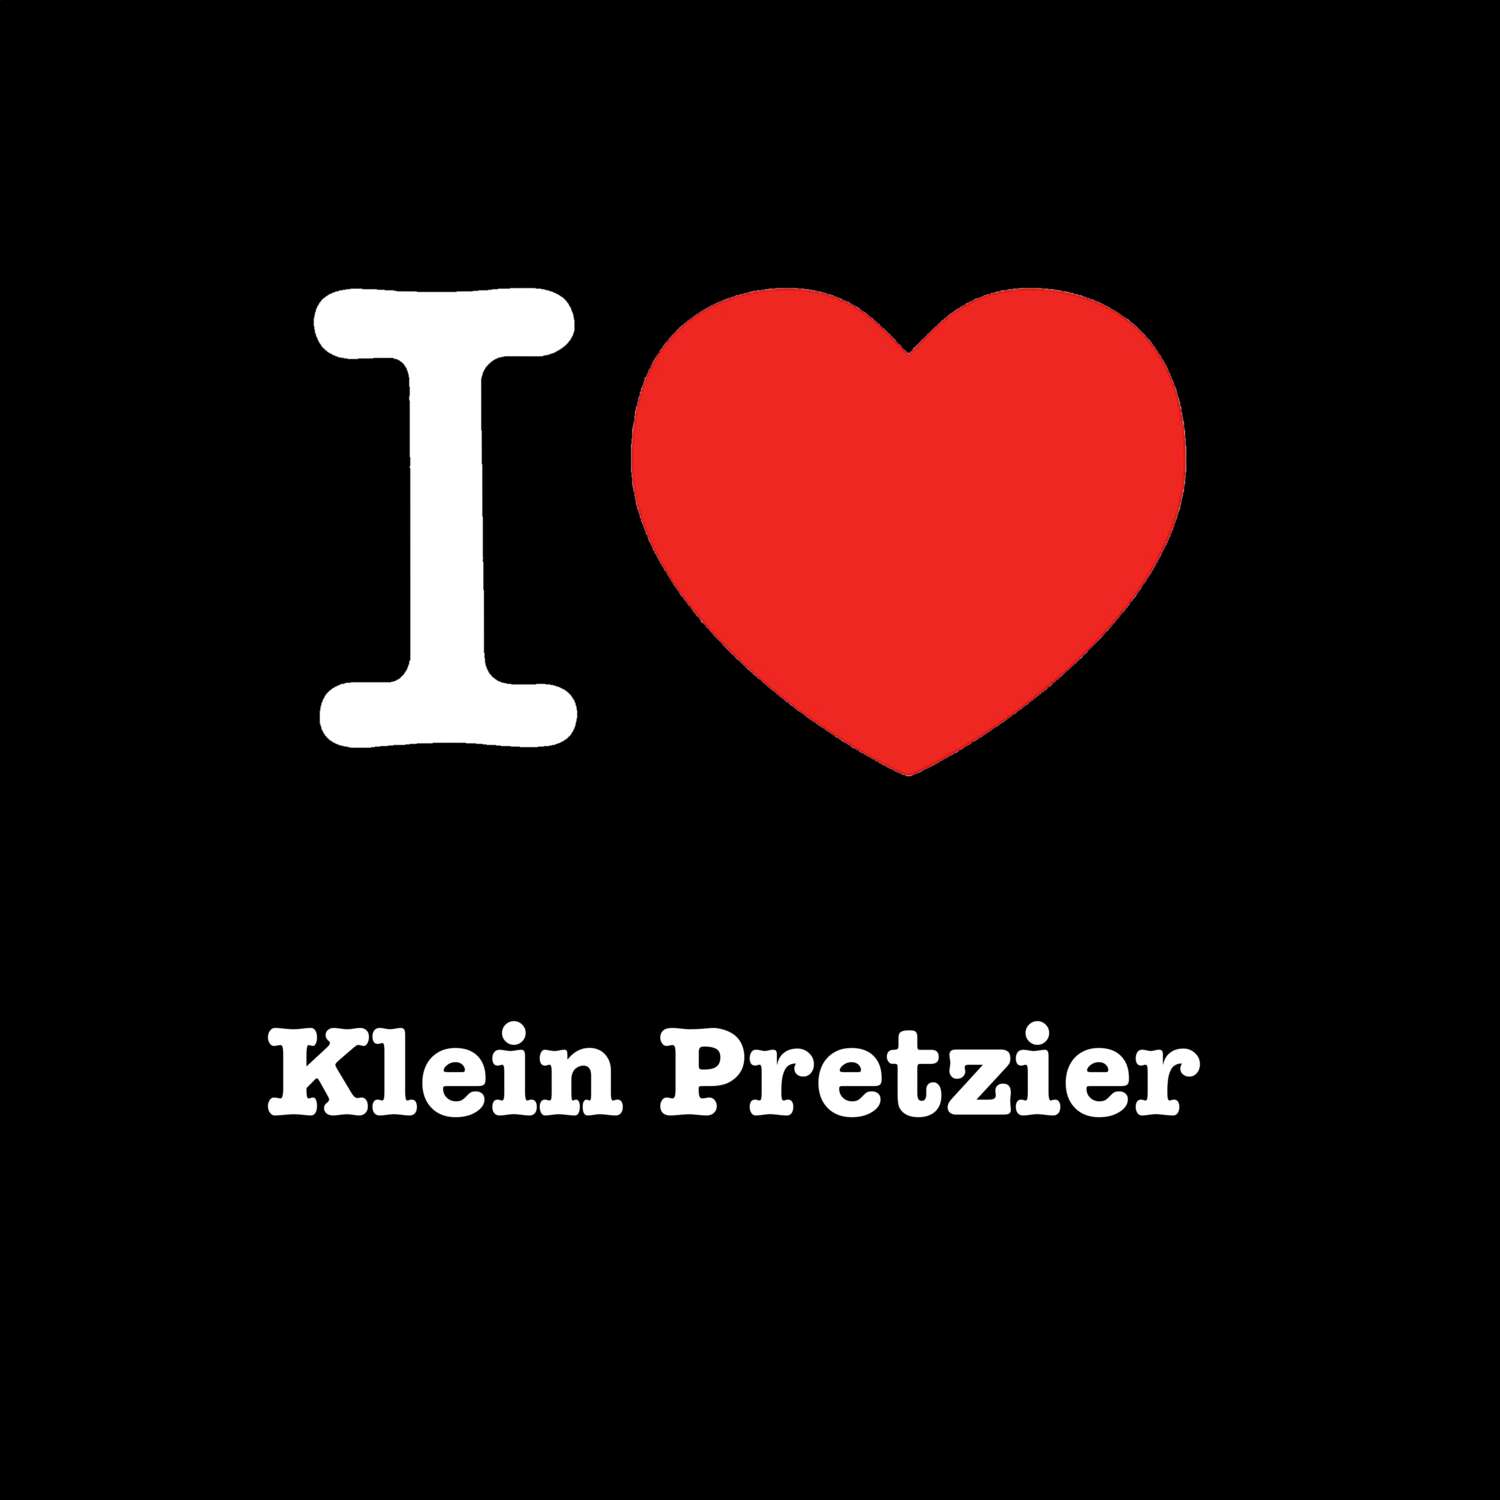 Klein Pretzier T-Shirt »I love«